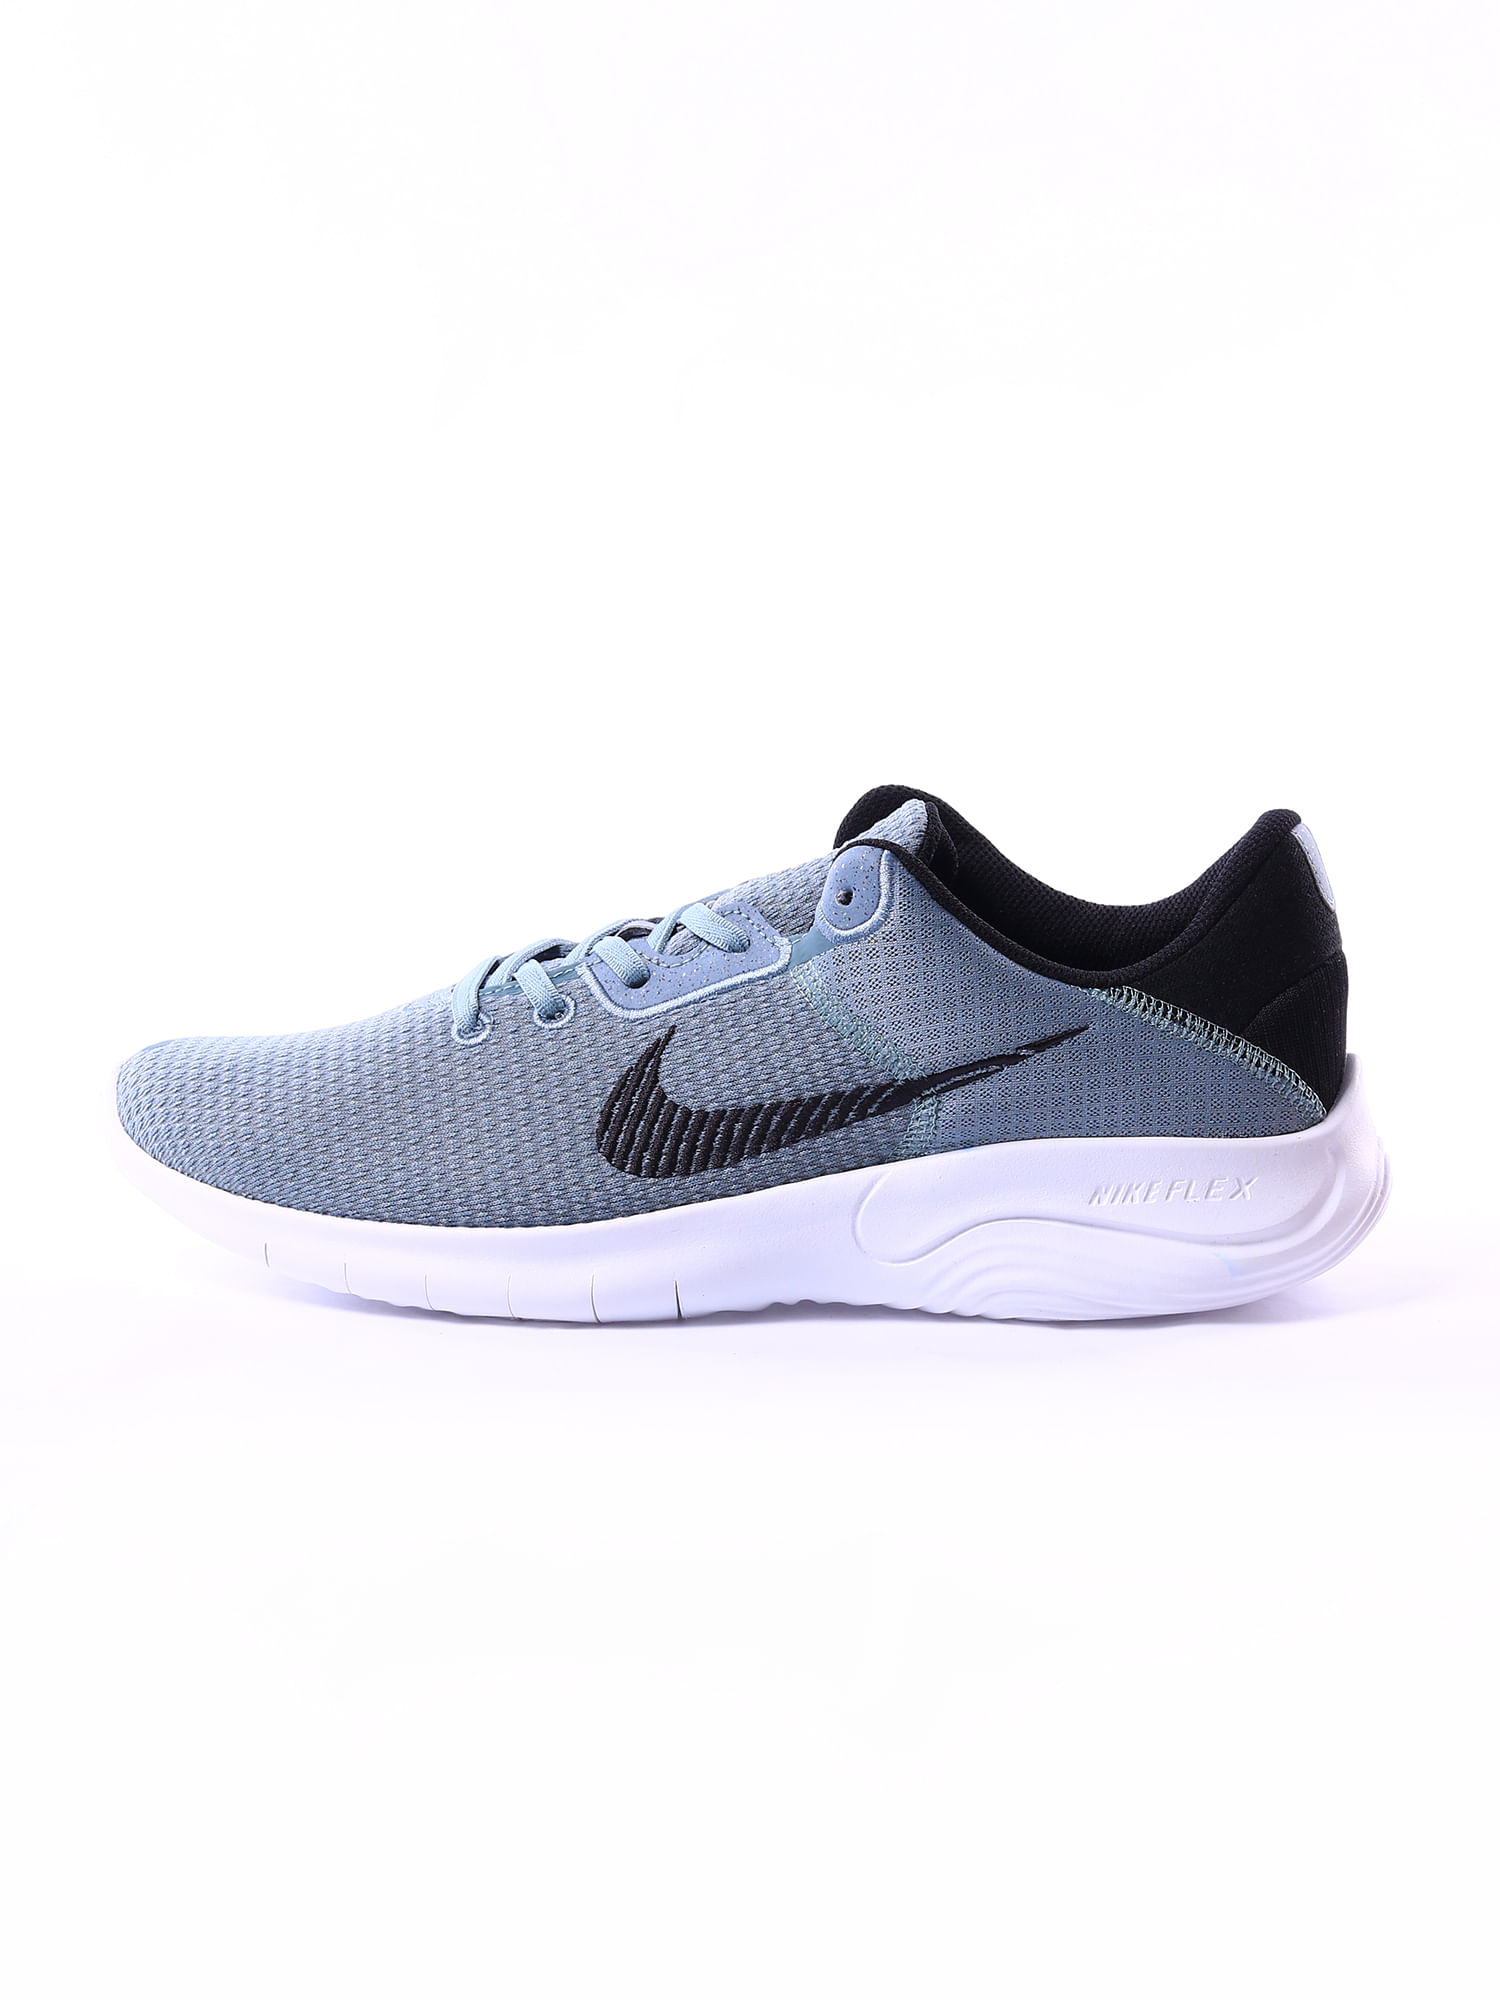 Nike Flex Experience Run 7 Running Shoes